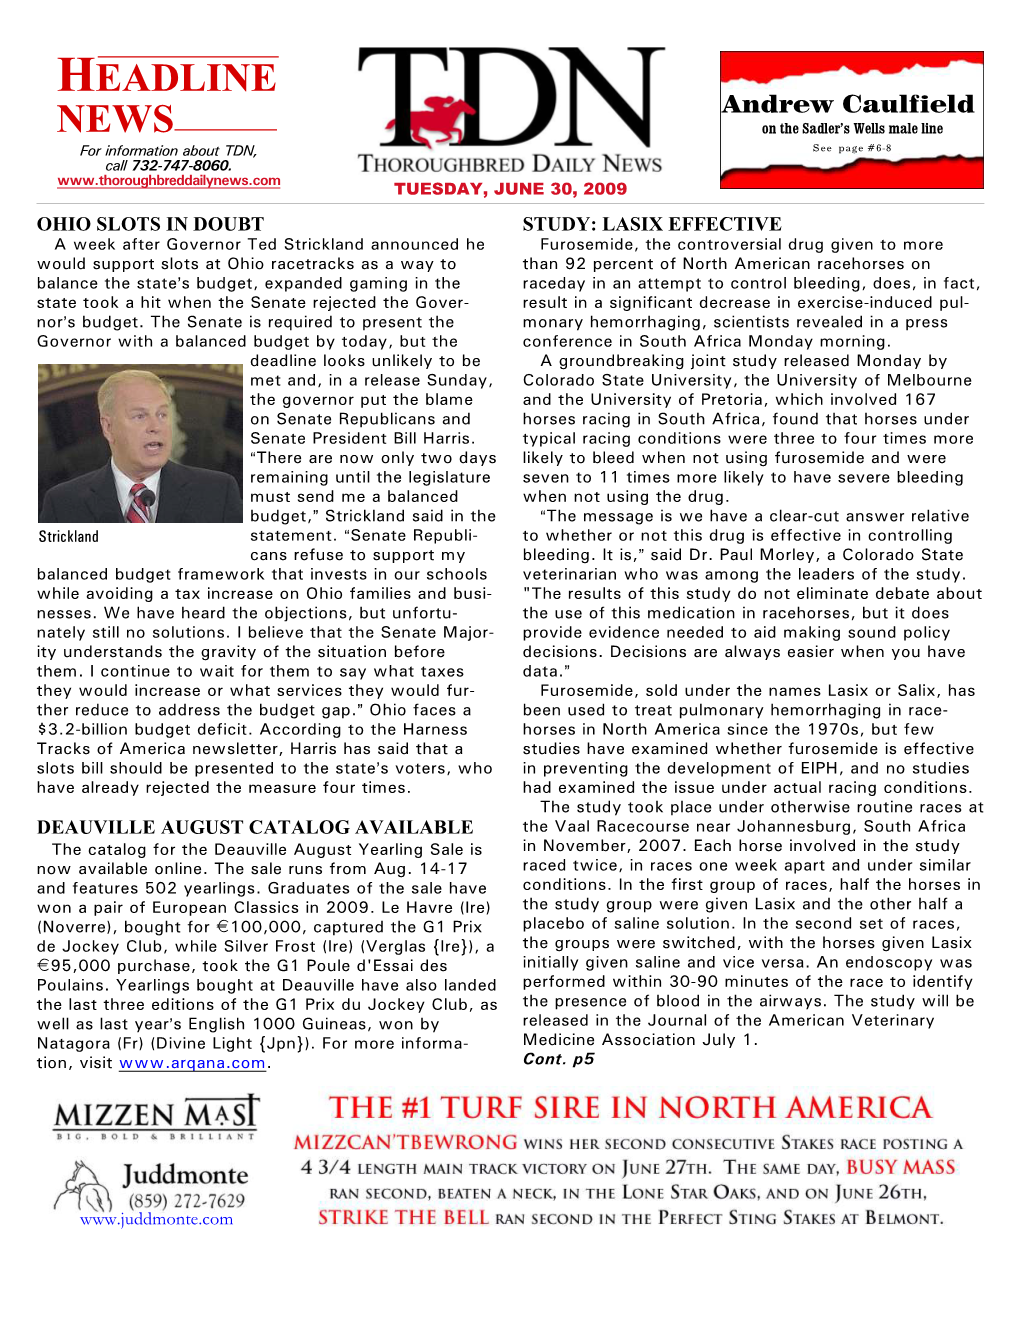 HEADLINE NEWS • 6/30/09 • PAGE 2 of 8